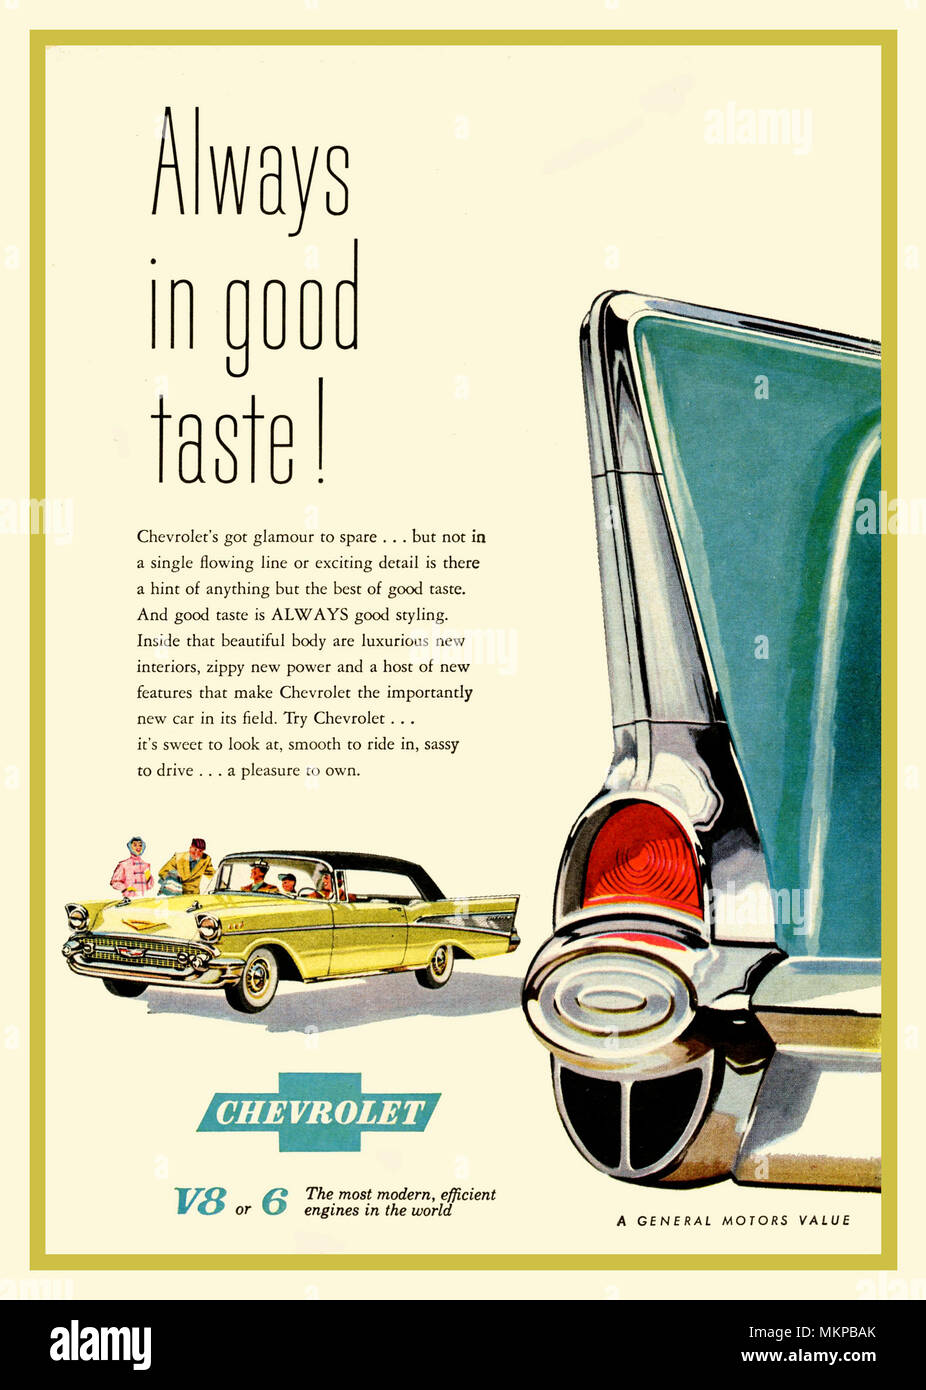 https://c8.alamy.com/comp/MKPBAK/1957-chevrolet-bel-air-sports-sedan-automobile-car-magazine-press-advertisement-always-in-good-taste-MKPBAK.jpg